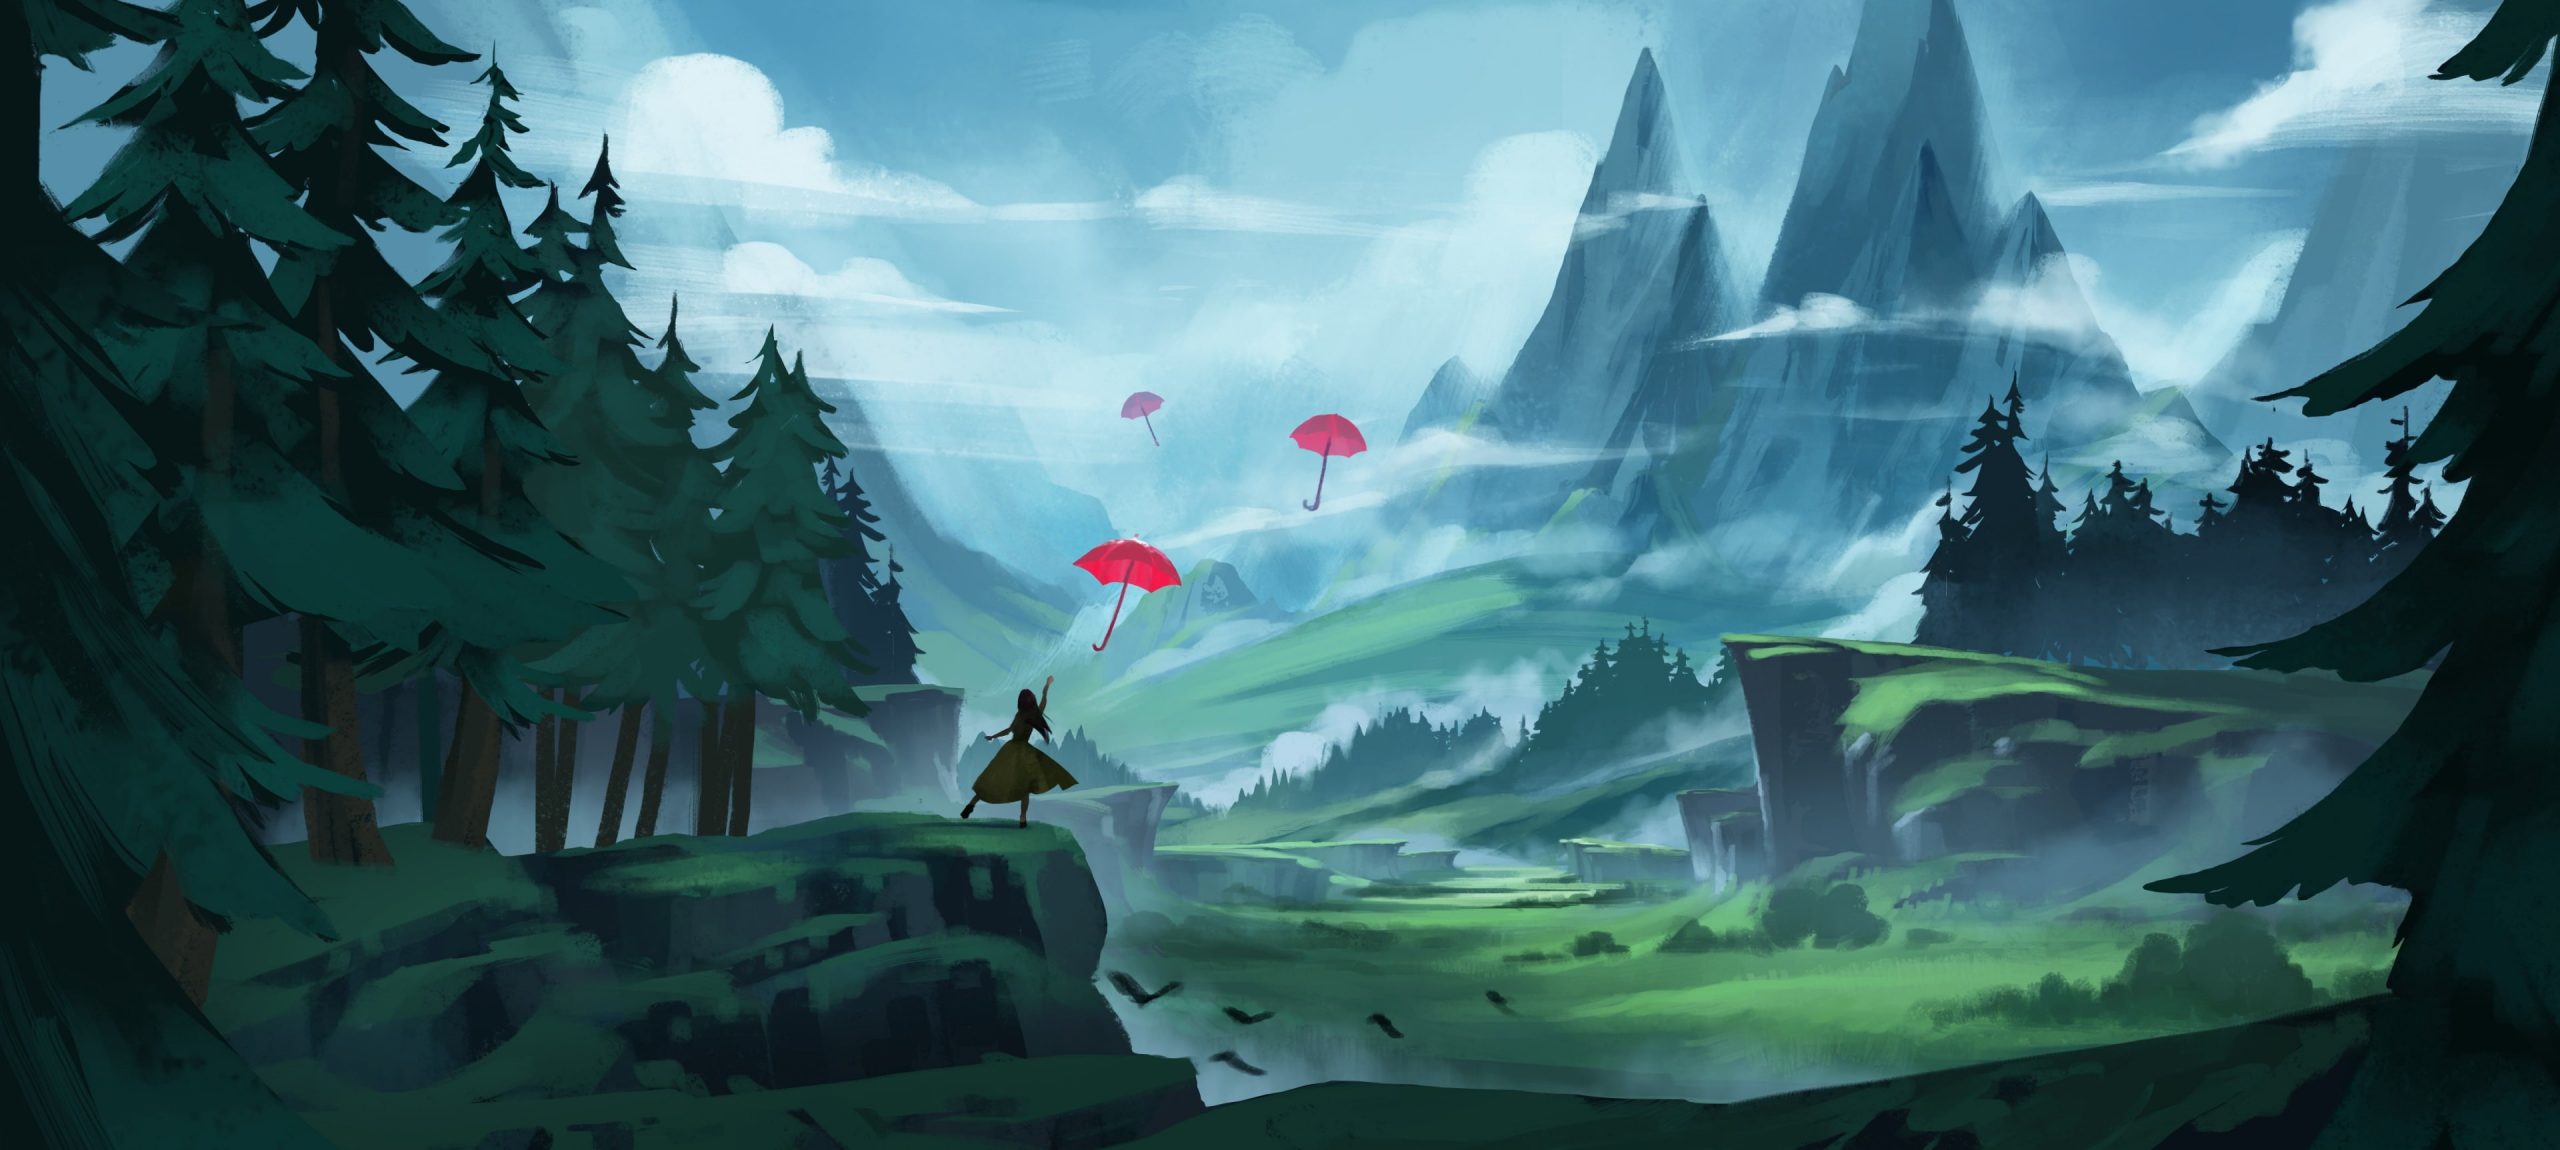 Illustration, women, landscape, mountains, forest, umbrella